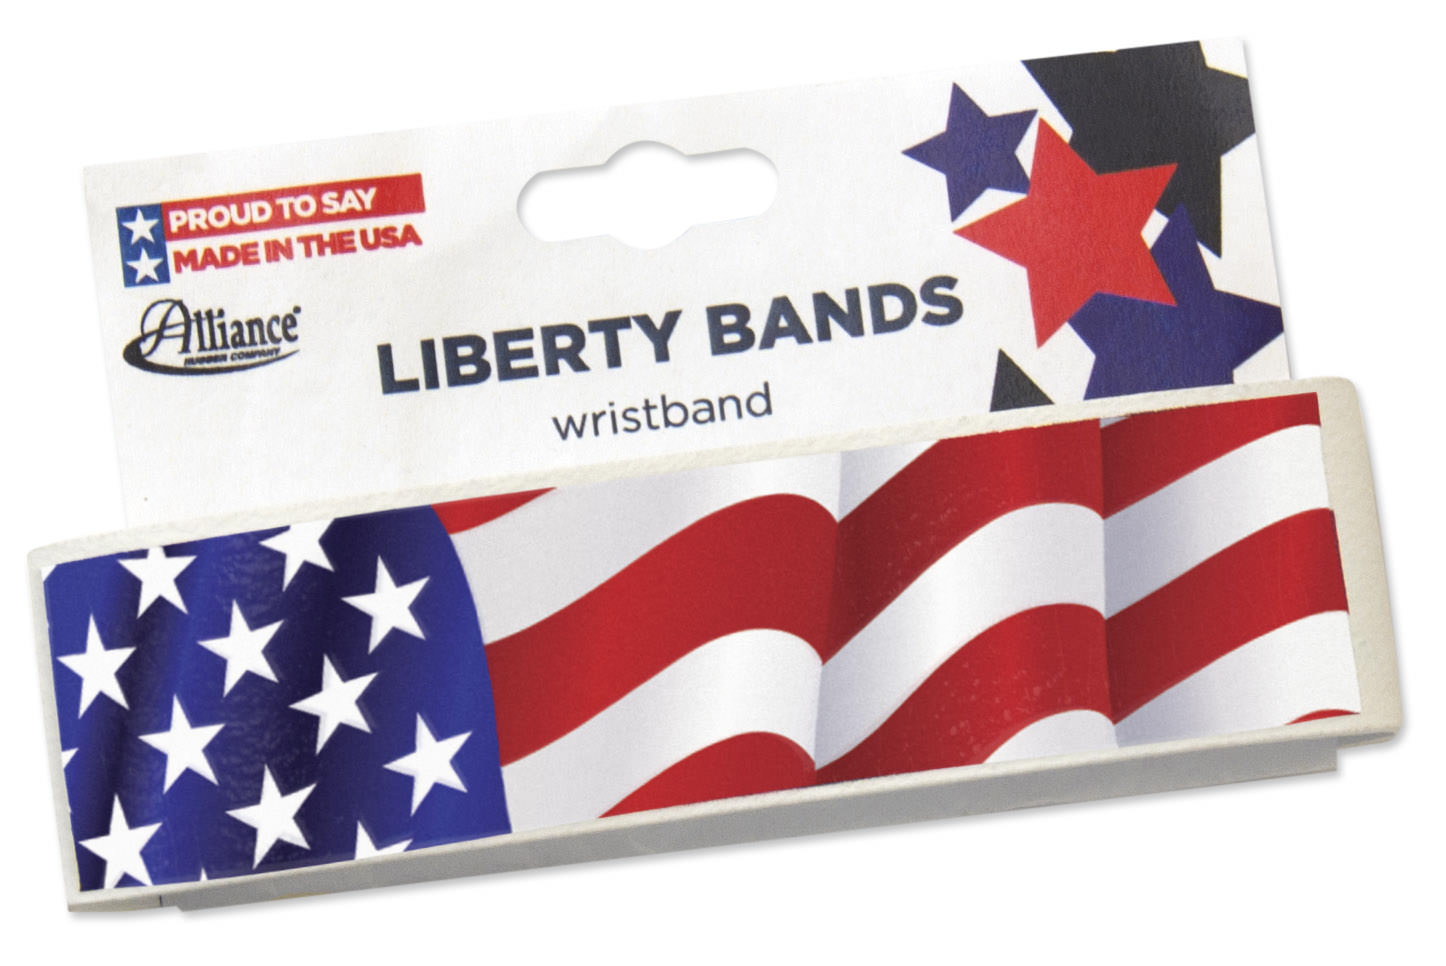 Introducing a uniquely patriotic wristband